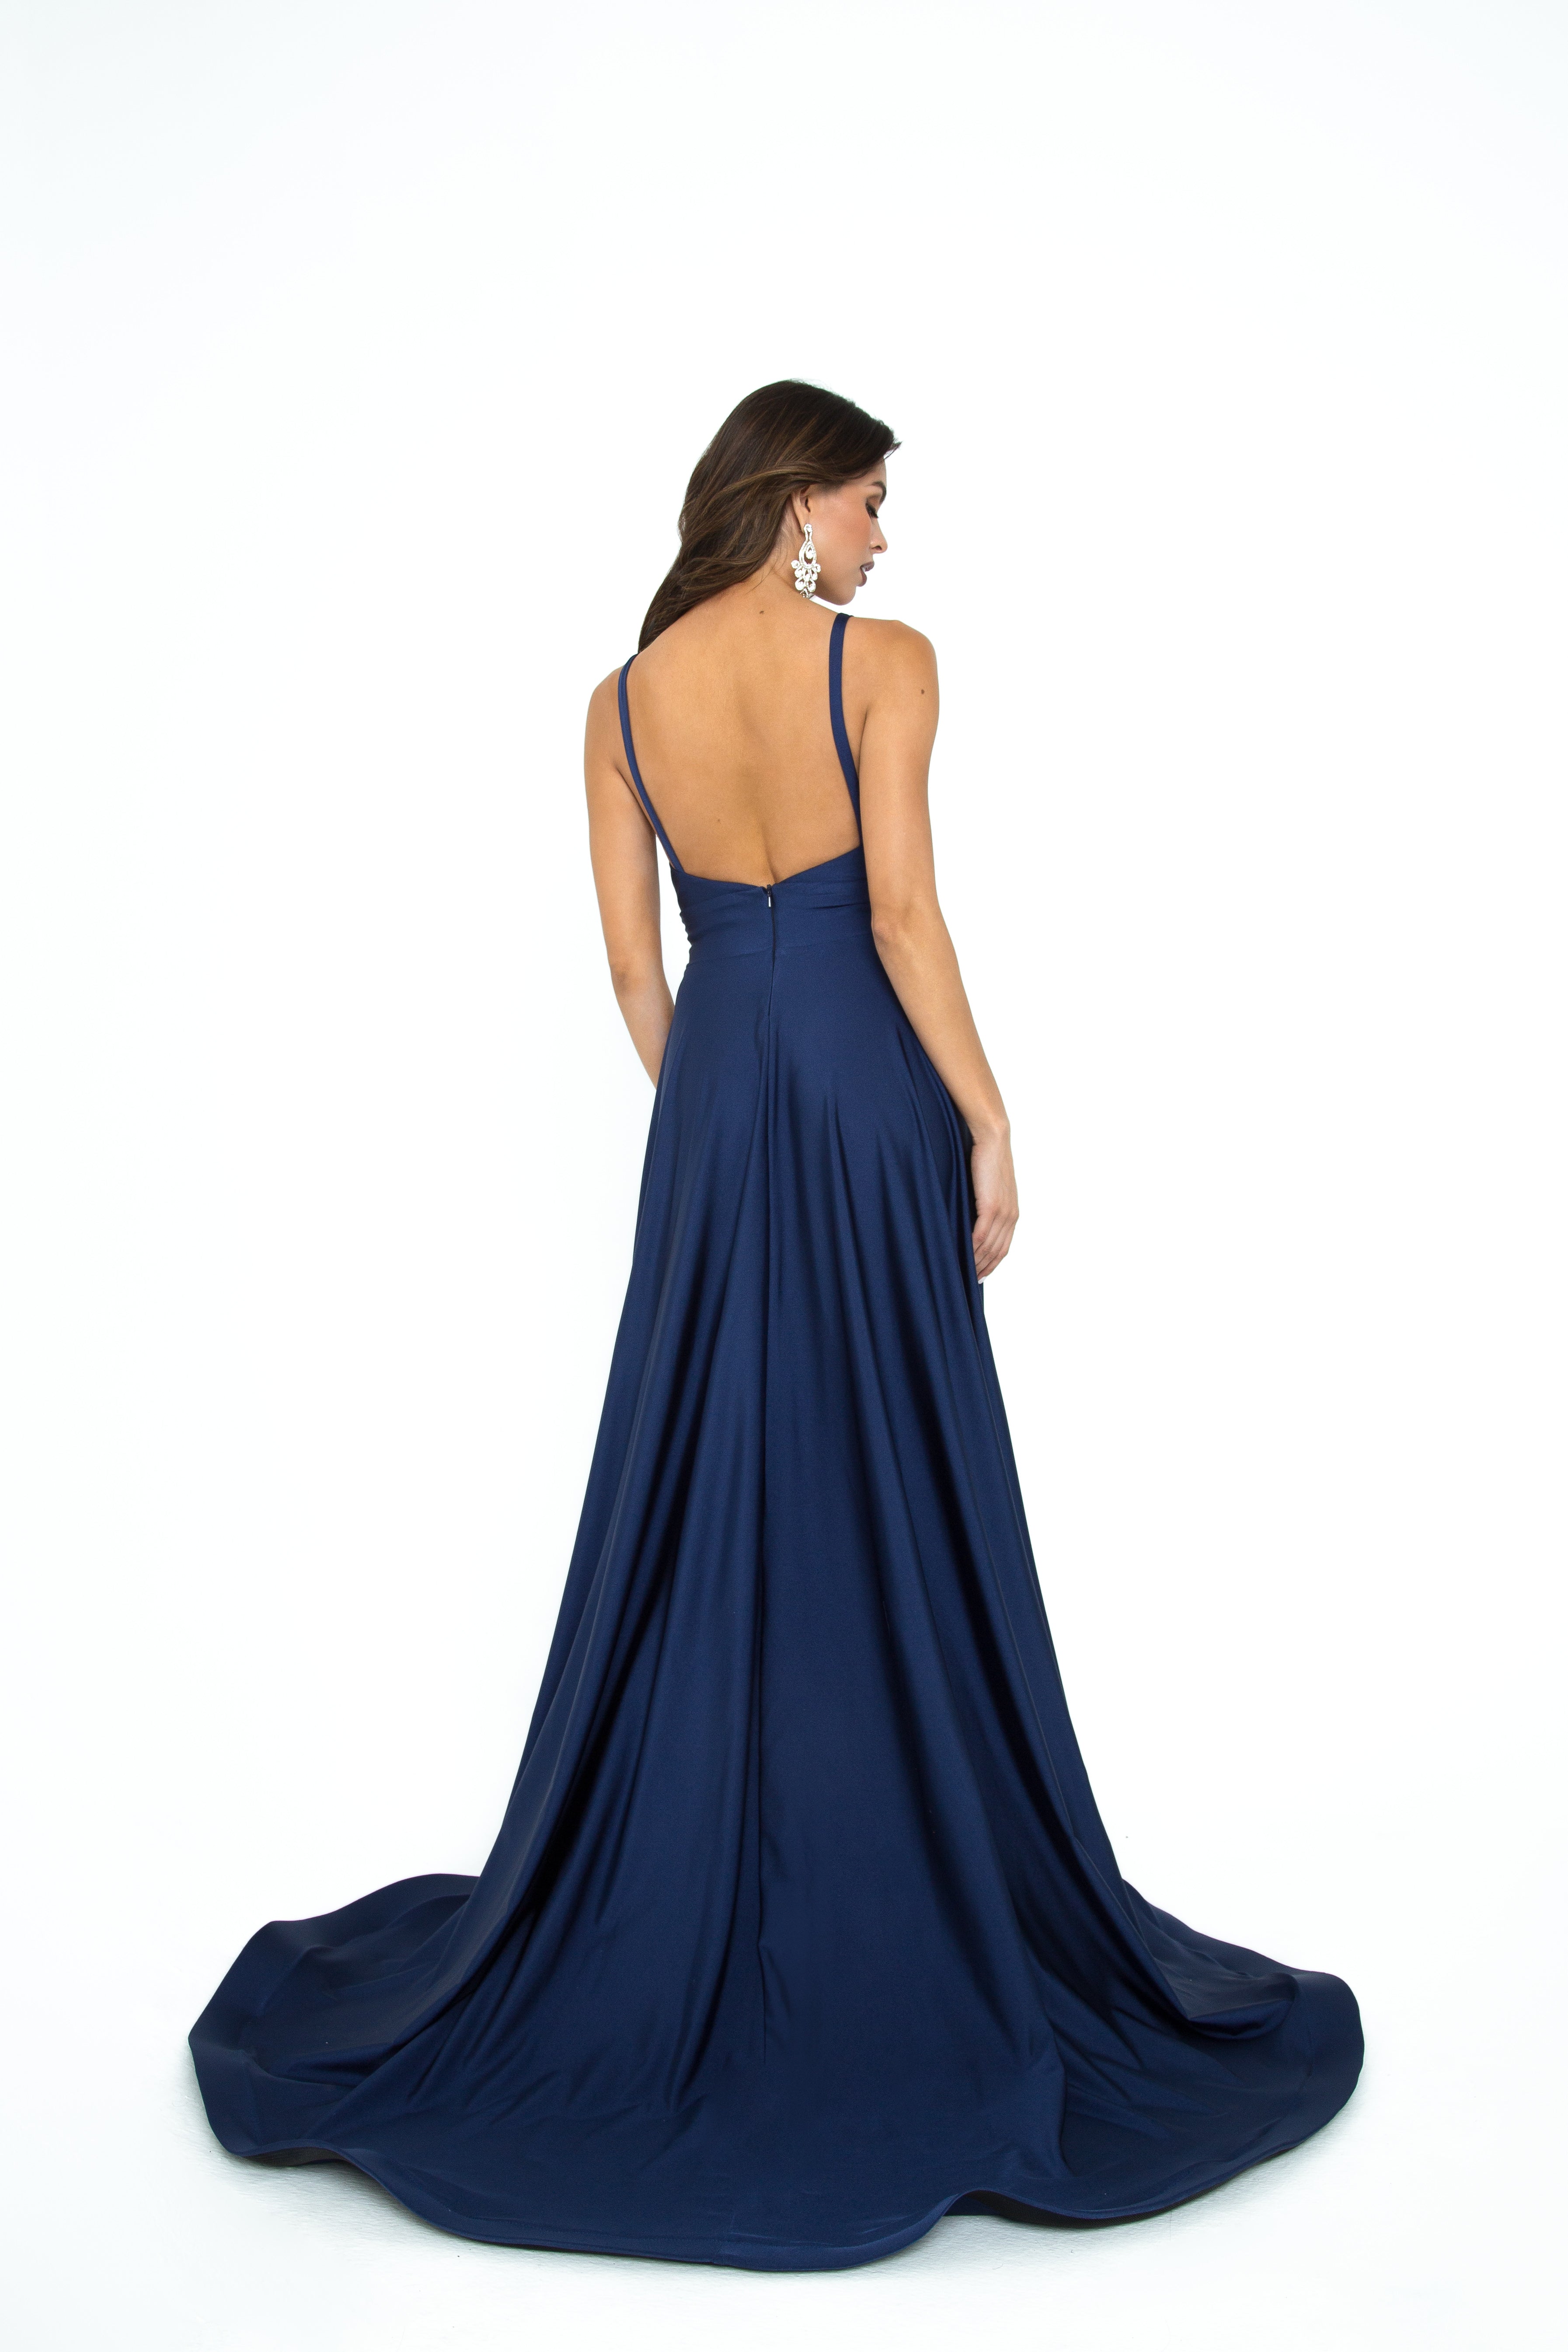 Atria 6505H navy blue prom dress